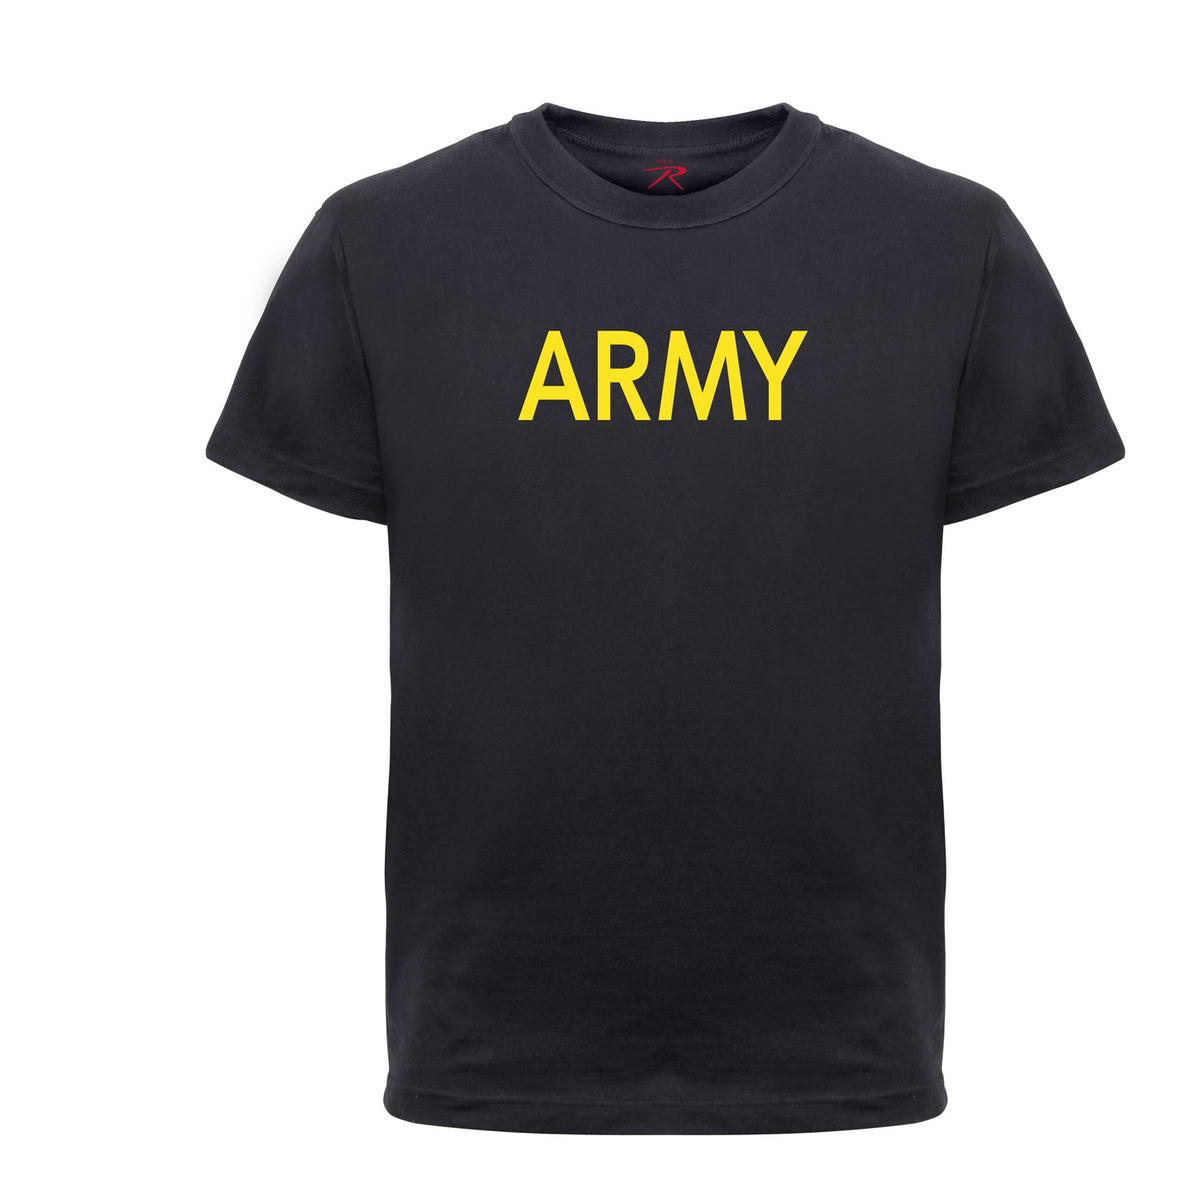 Rothco Kids Army Physical Training T-Shirt Black